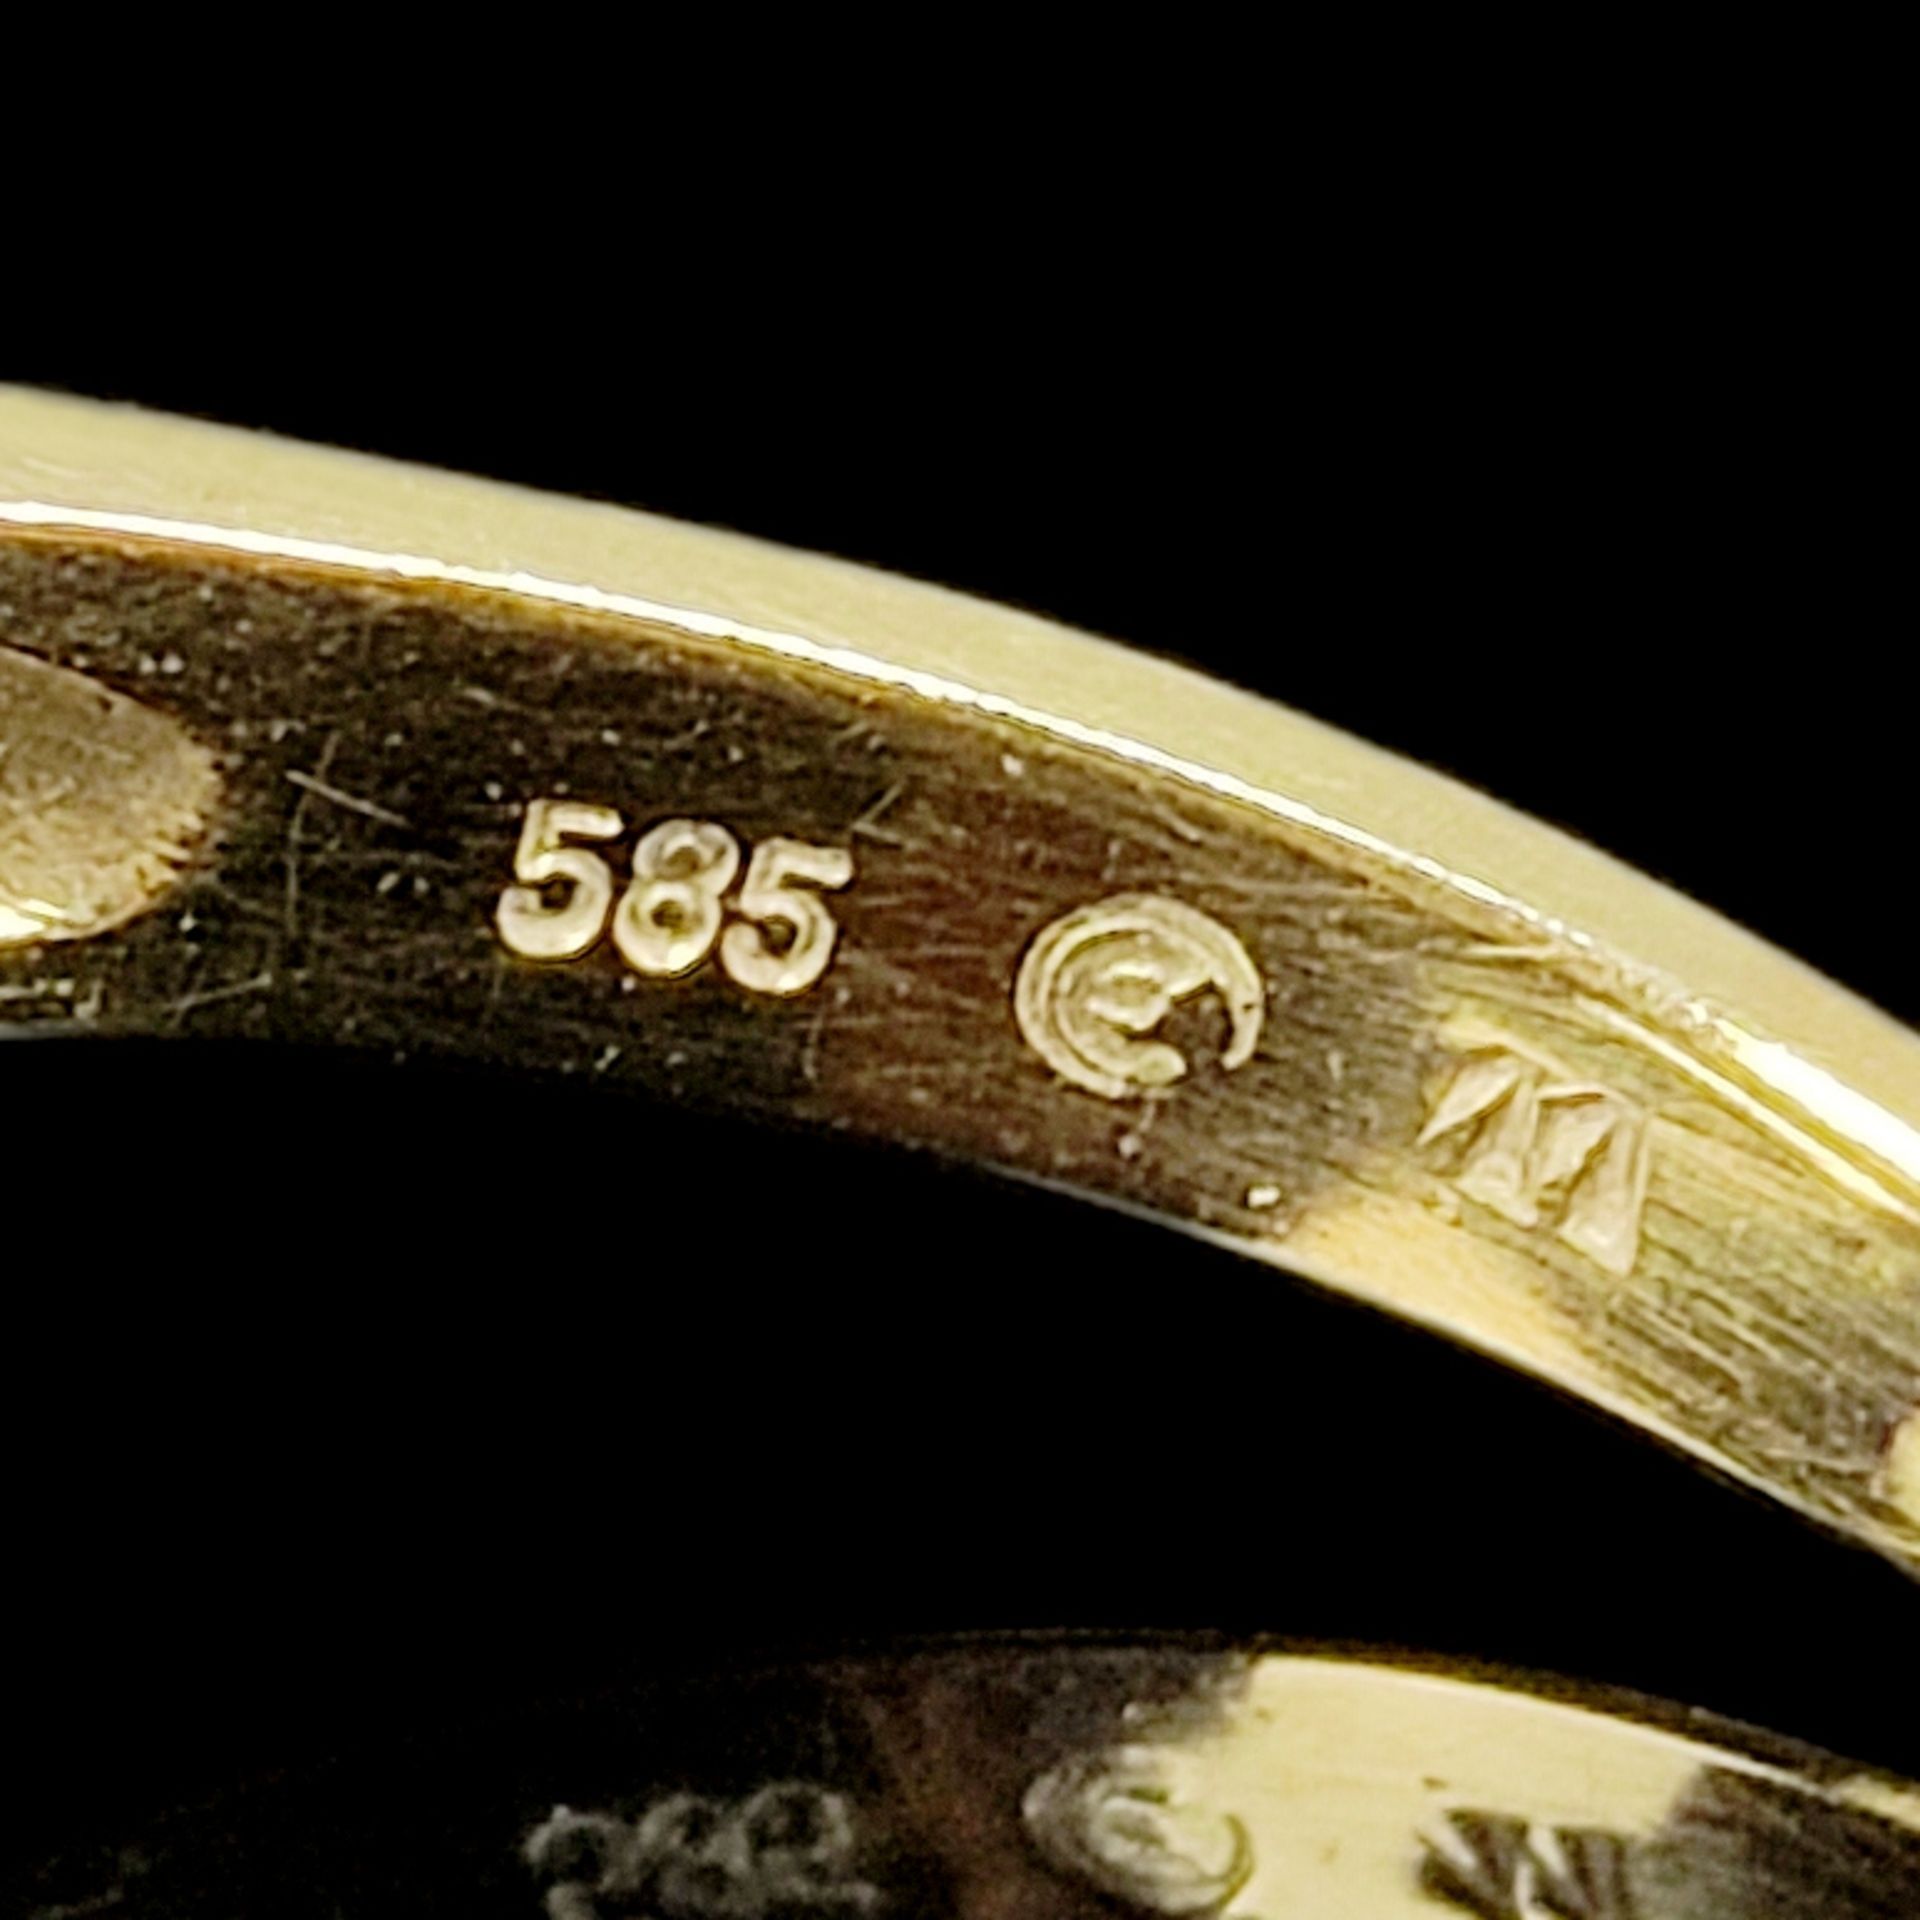 Aquamarin-Ring, 585/14K Gelbgold (punziert), 5,92g, mittig oval facettierter Aquamarin, Ringgröße 6 - Bild 3 aus 3